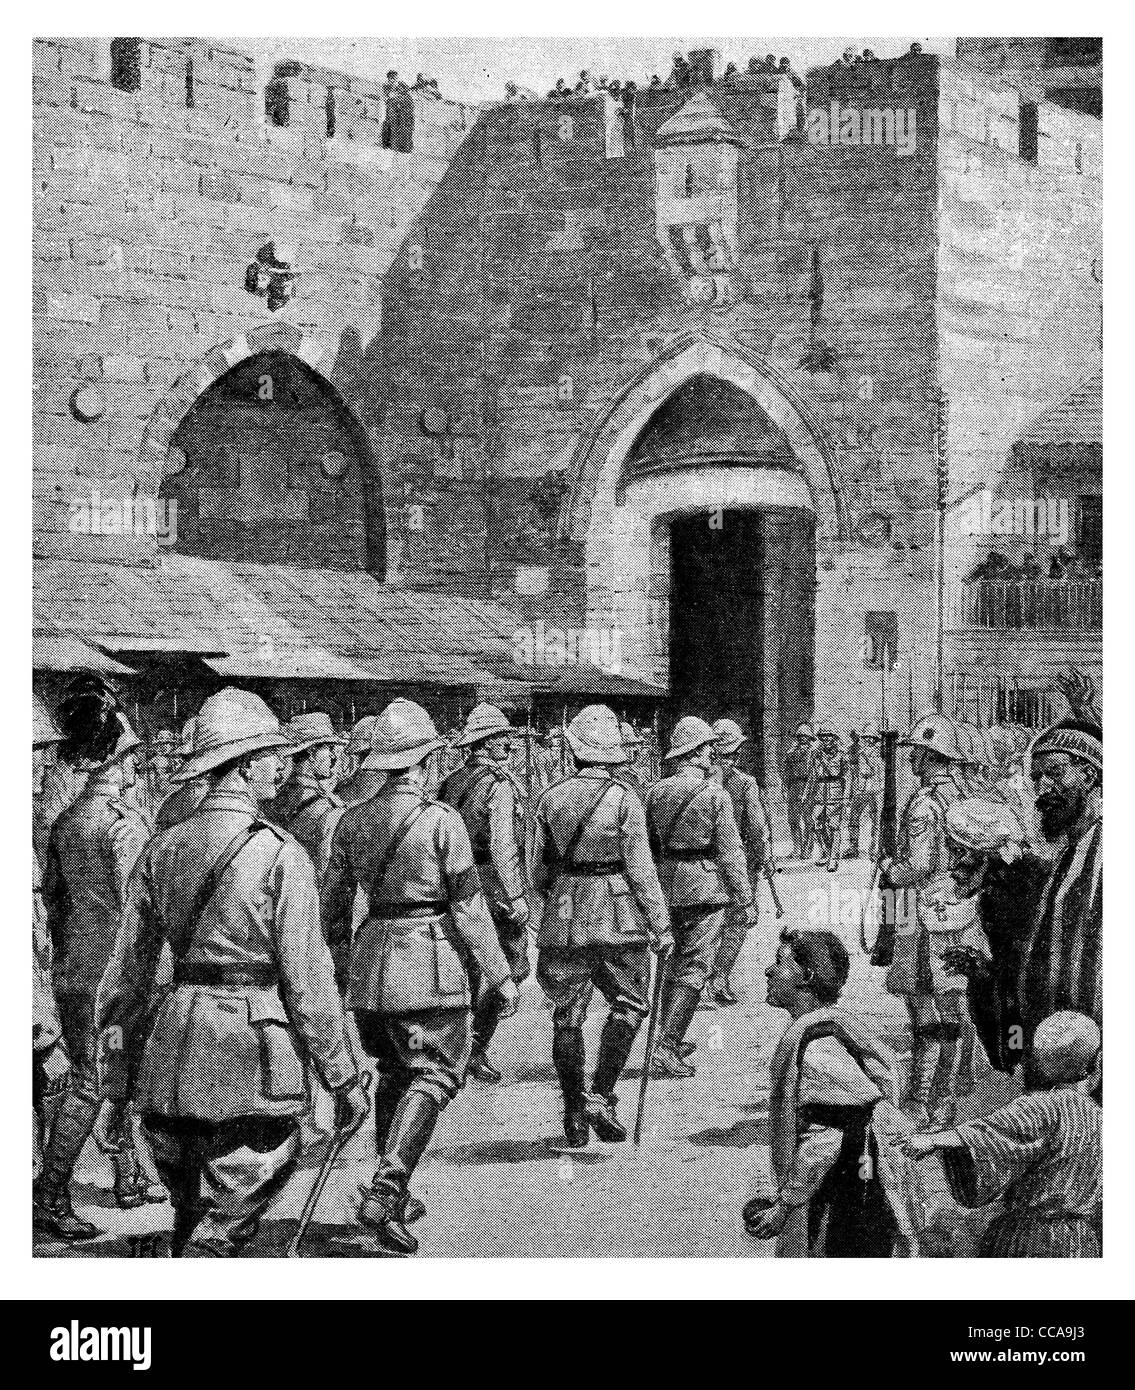 Field Marshal Sir Edmund Henry Hynman Allenby 1st Viscount Entry Jerusalem Dec 9th 1915 David's Jaffa Gate entrance city wall Stock Photo